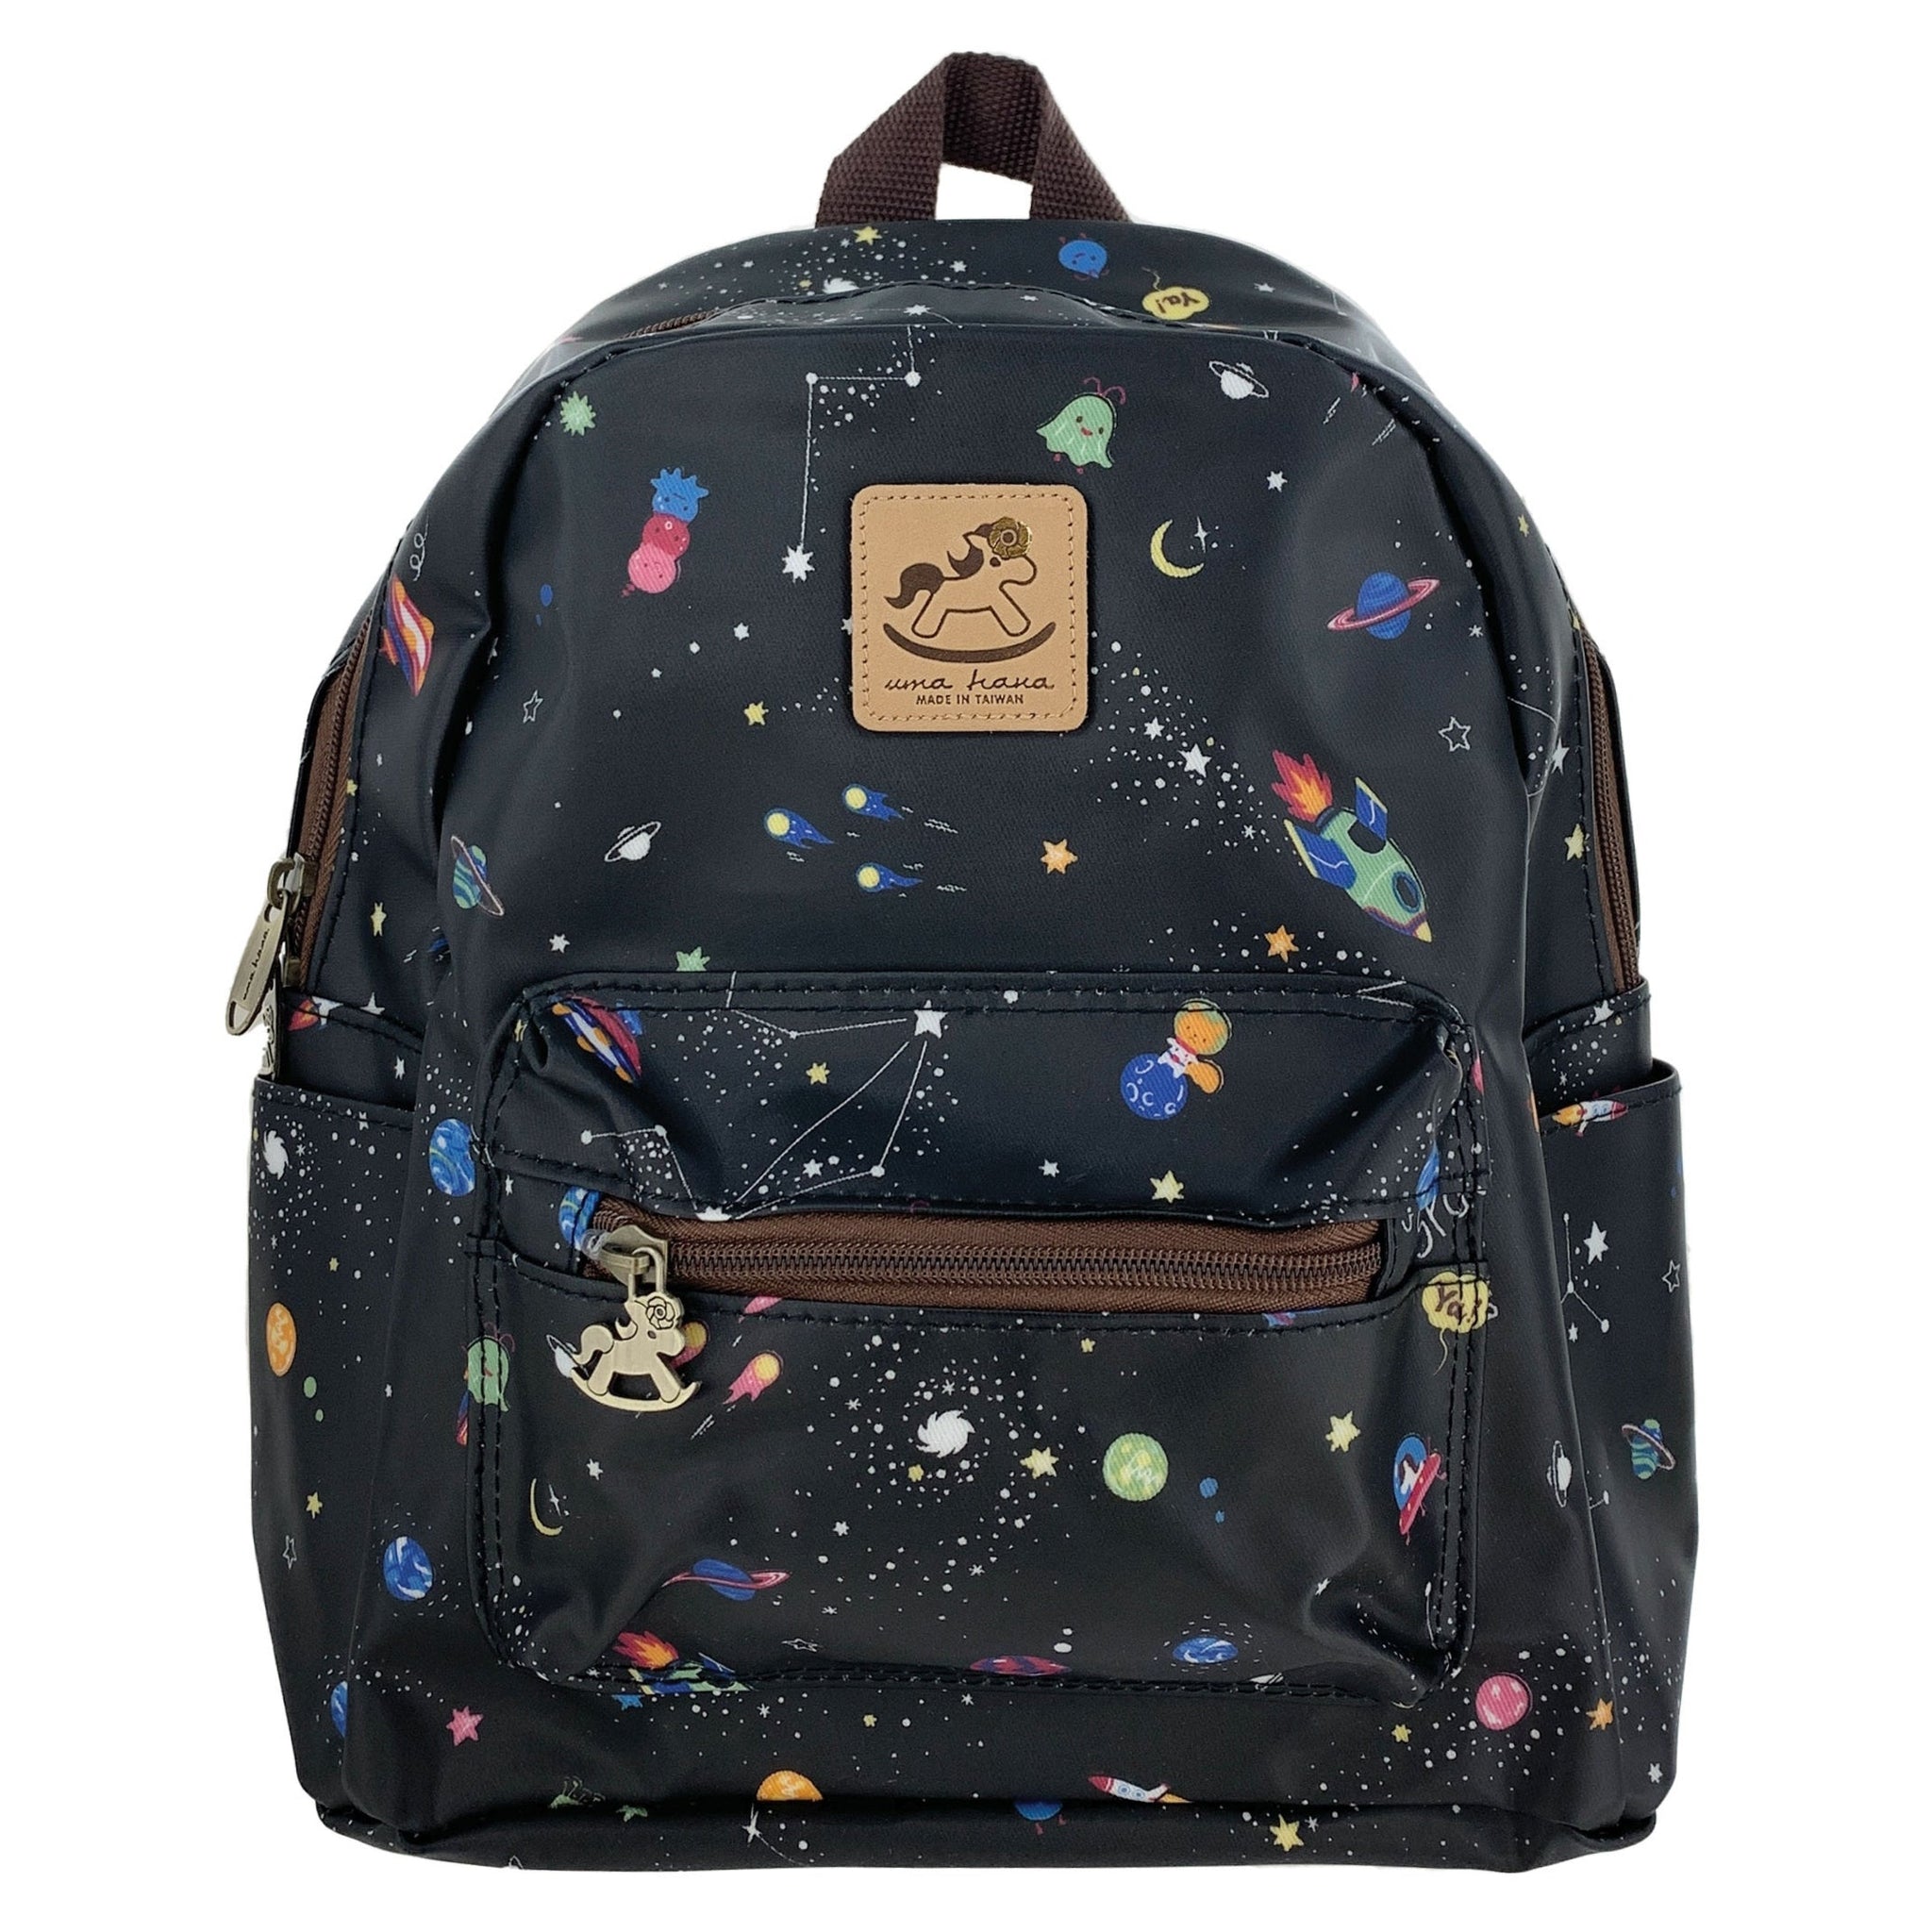 Black Galaxy Small Backpack